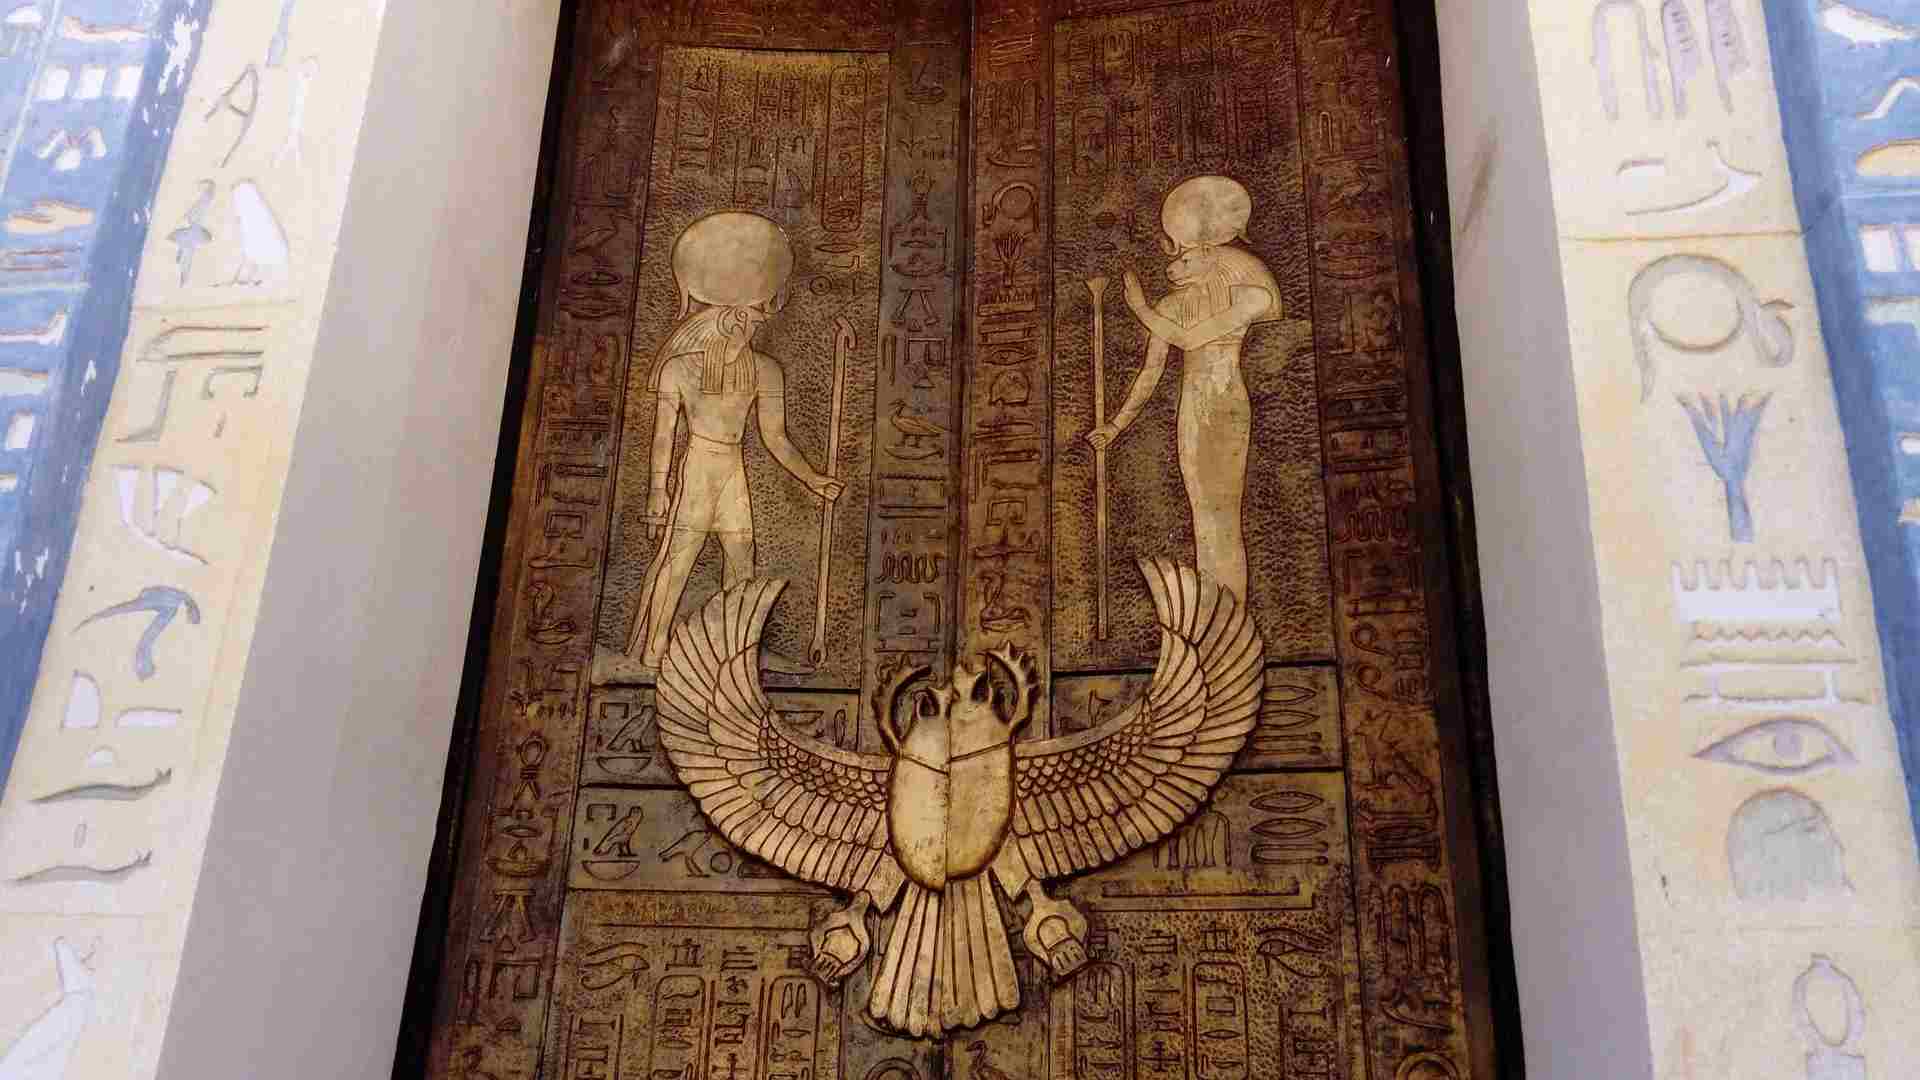 Last true Pharaohs who ruled the land of Egypt